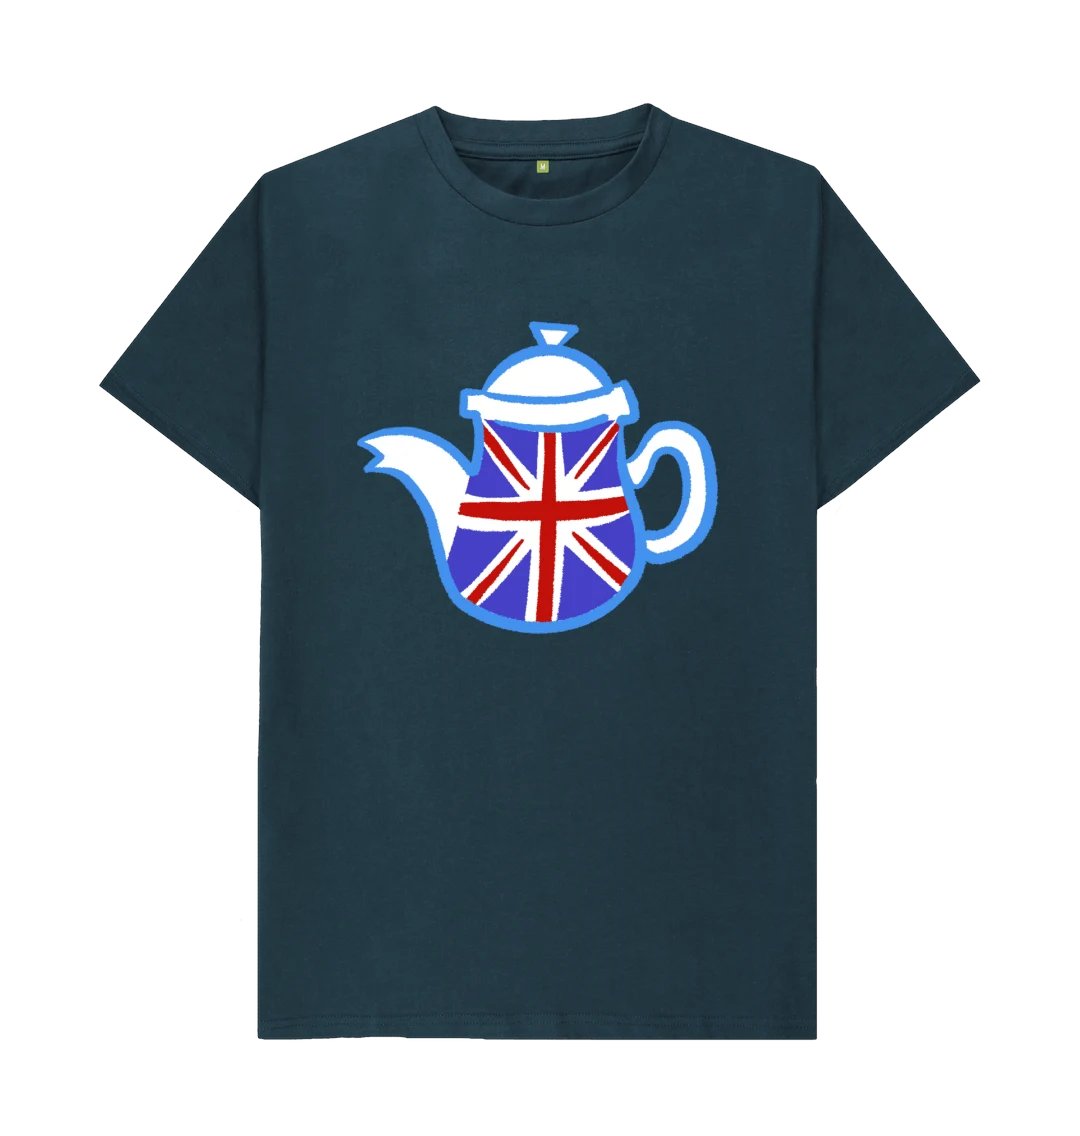 👀New Designs available now!

🇬🇧Cool Britannia Theme 🇬🇧

Thinking ahead to the King's Coronation 👑

Shop Now 👉 jims-tees.teemill.com 👕🛍️
Sizes XS-XXL 👍

#Mensfashion #Menswear #tshirt #cool #coolbritannia #britain #Coronation #KingCharlesIII #fashion #tshirtshop #saturday